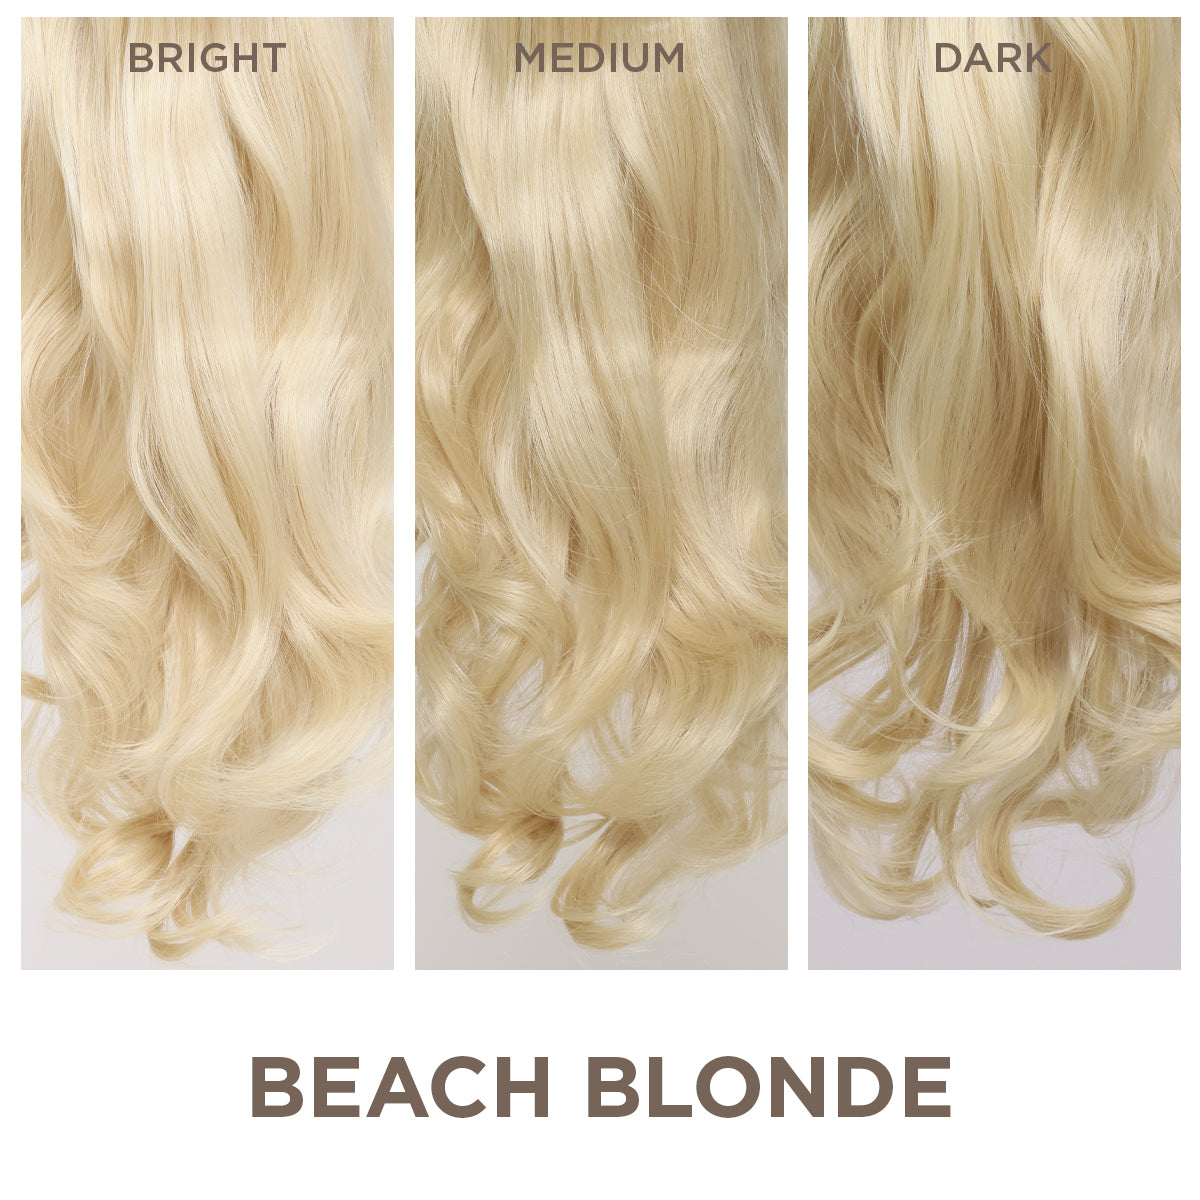 Beach Blonde